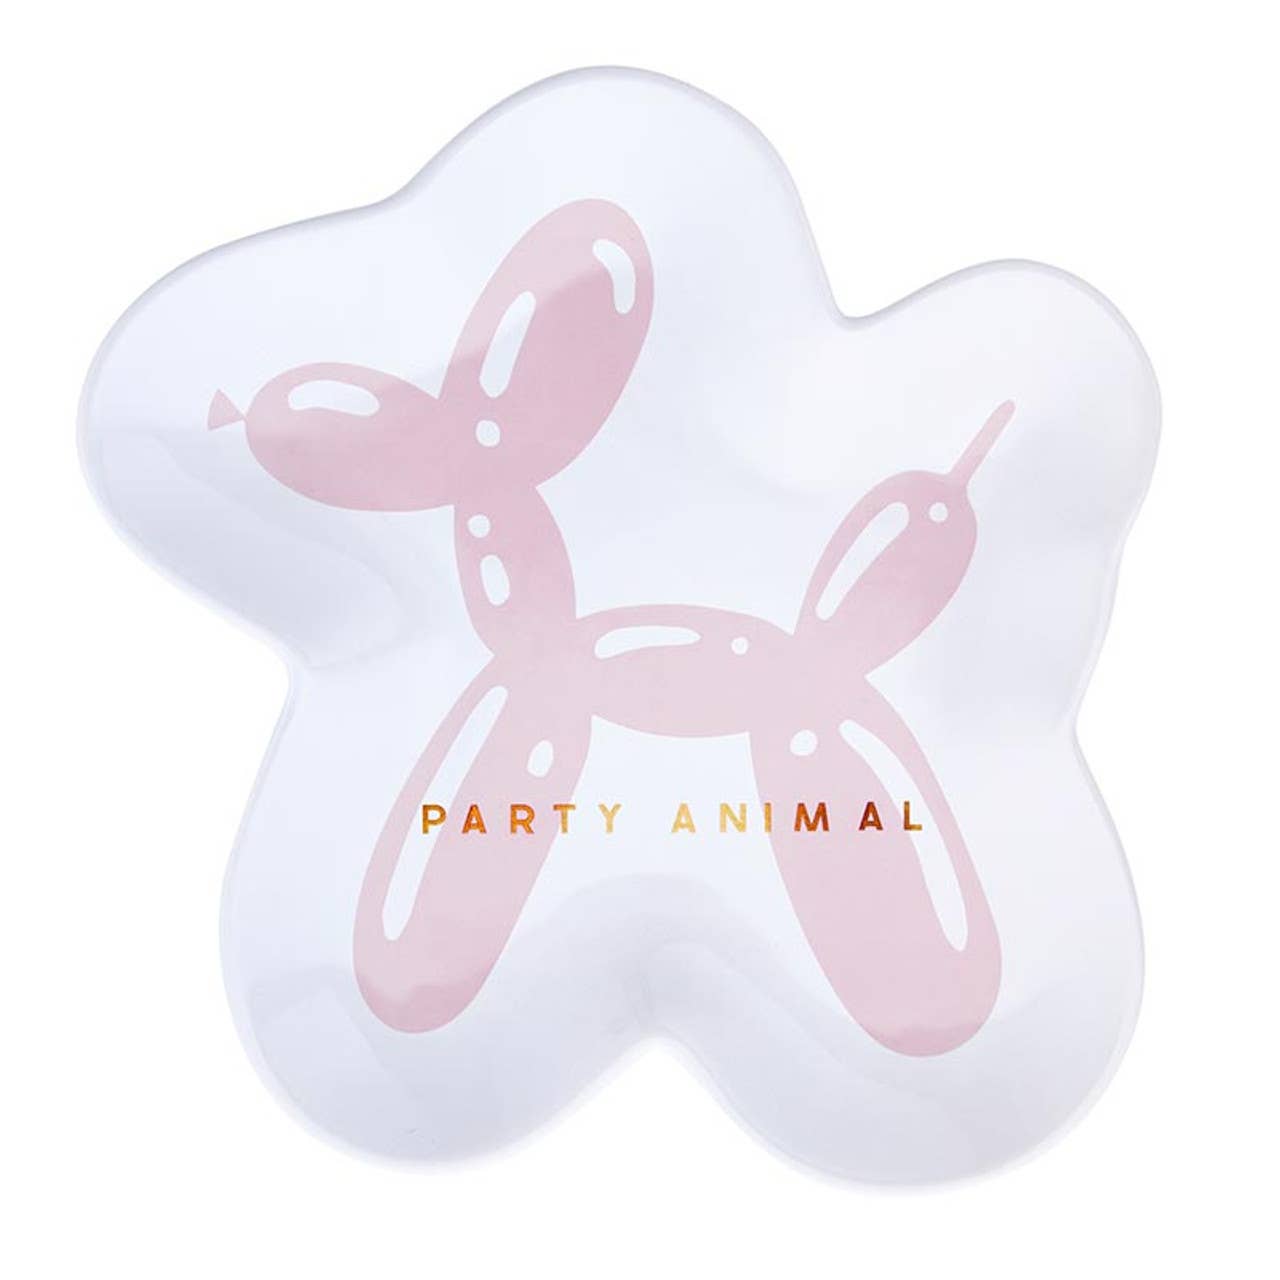 Ceramic Plate-Party Animal